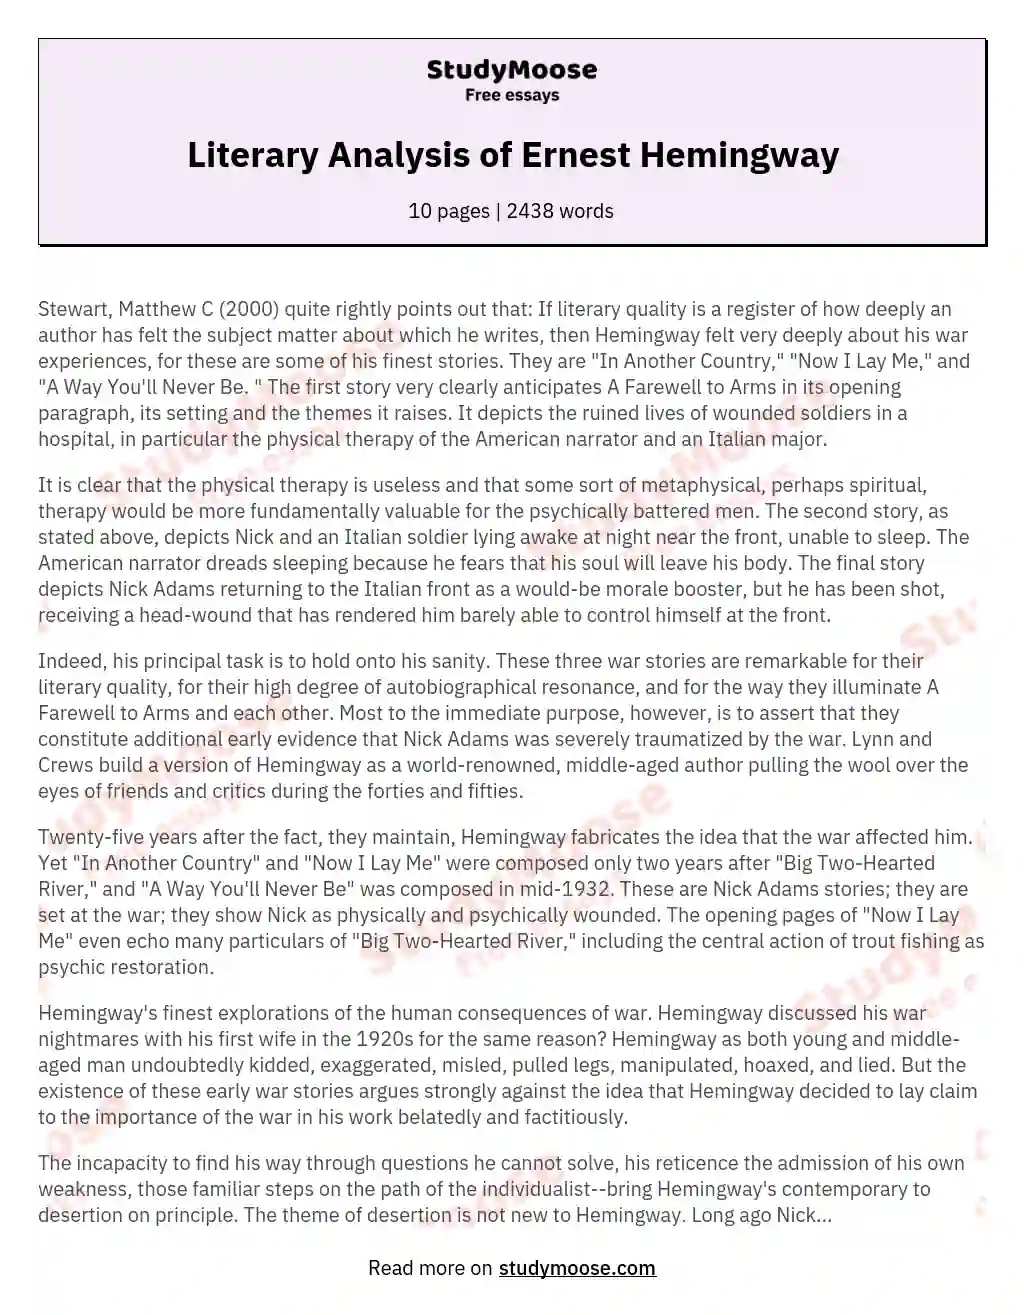 Literary Analysis of Ernest Hemingway essay